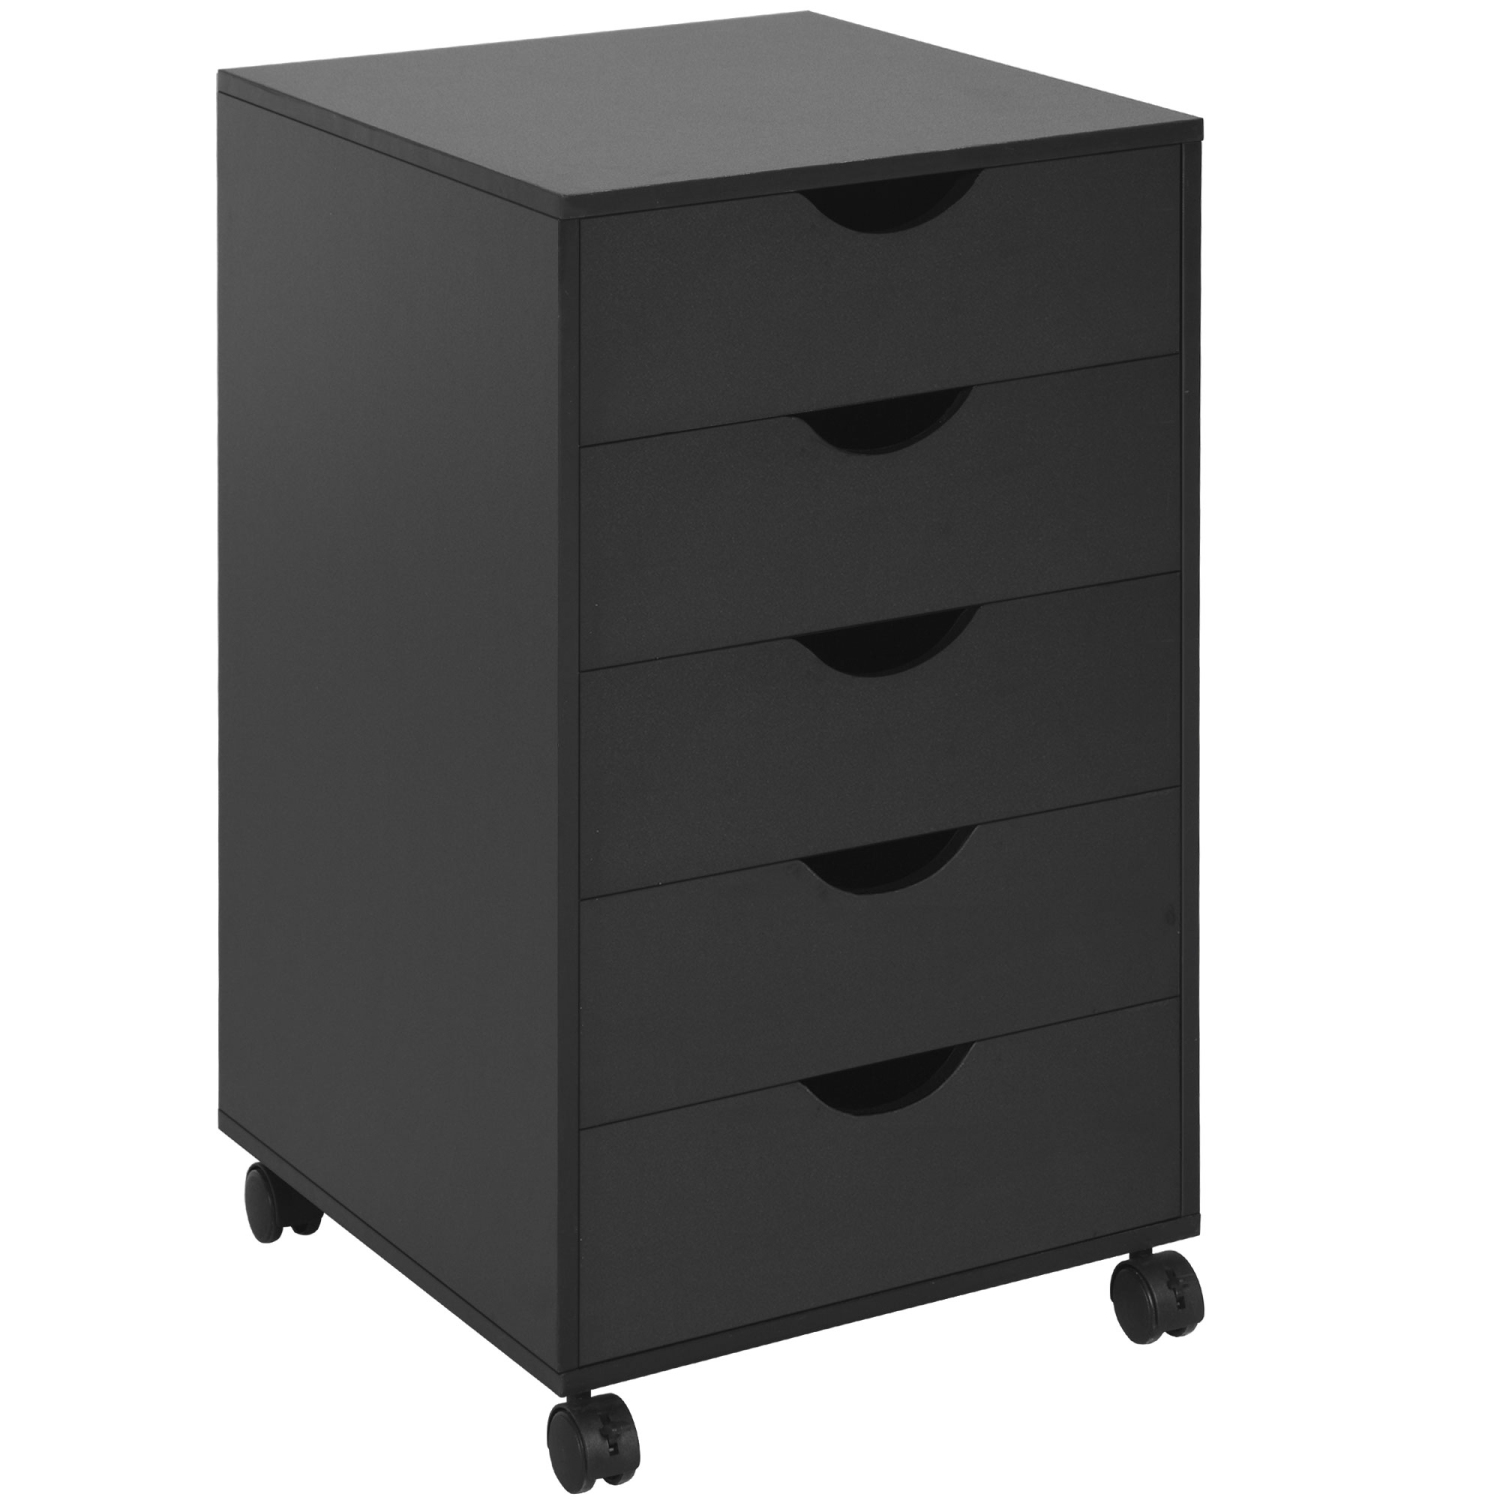 HOMCOM 5 Drawer Mobile File Cabinet, Rolling Printer Stand, Modern Vertical Filing Cabinet for Home Office, Black